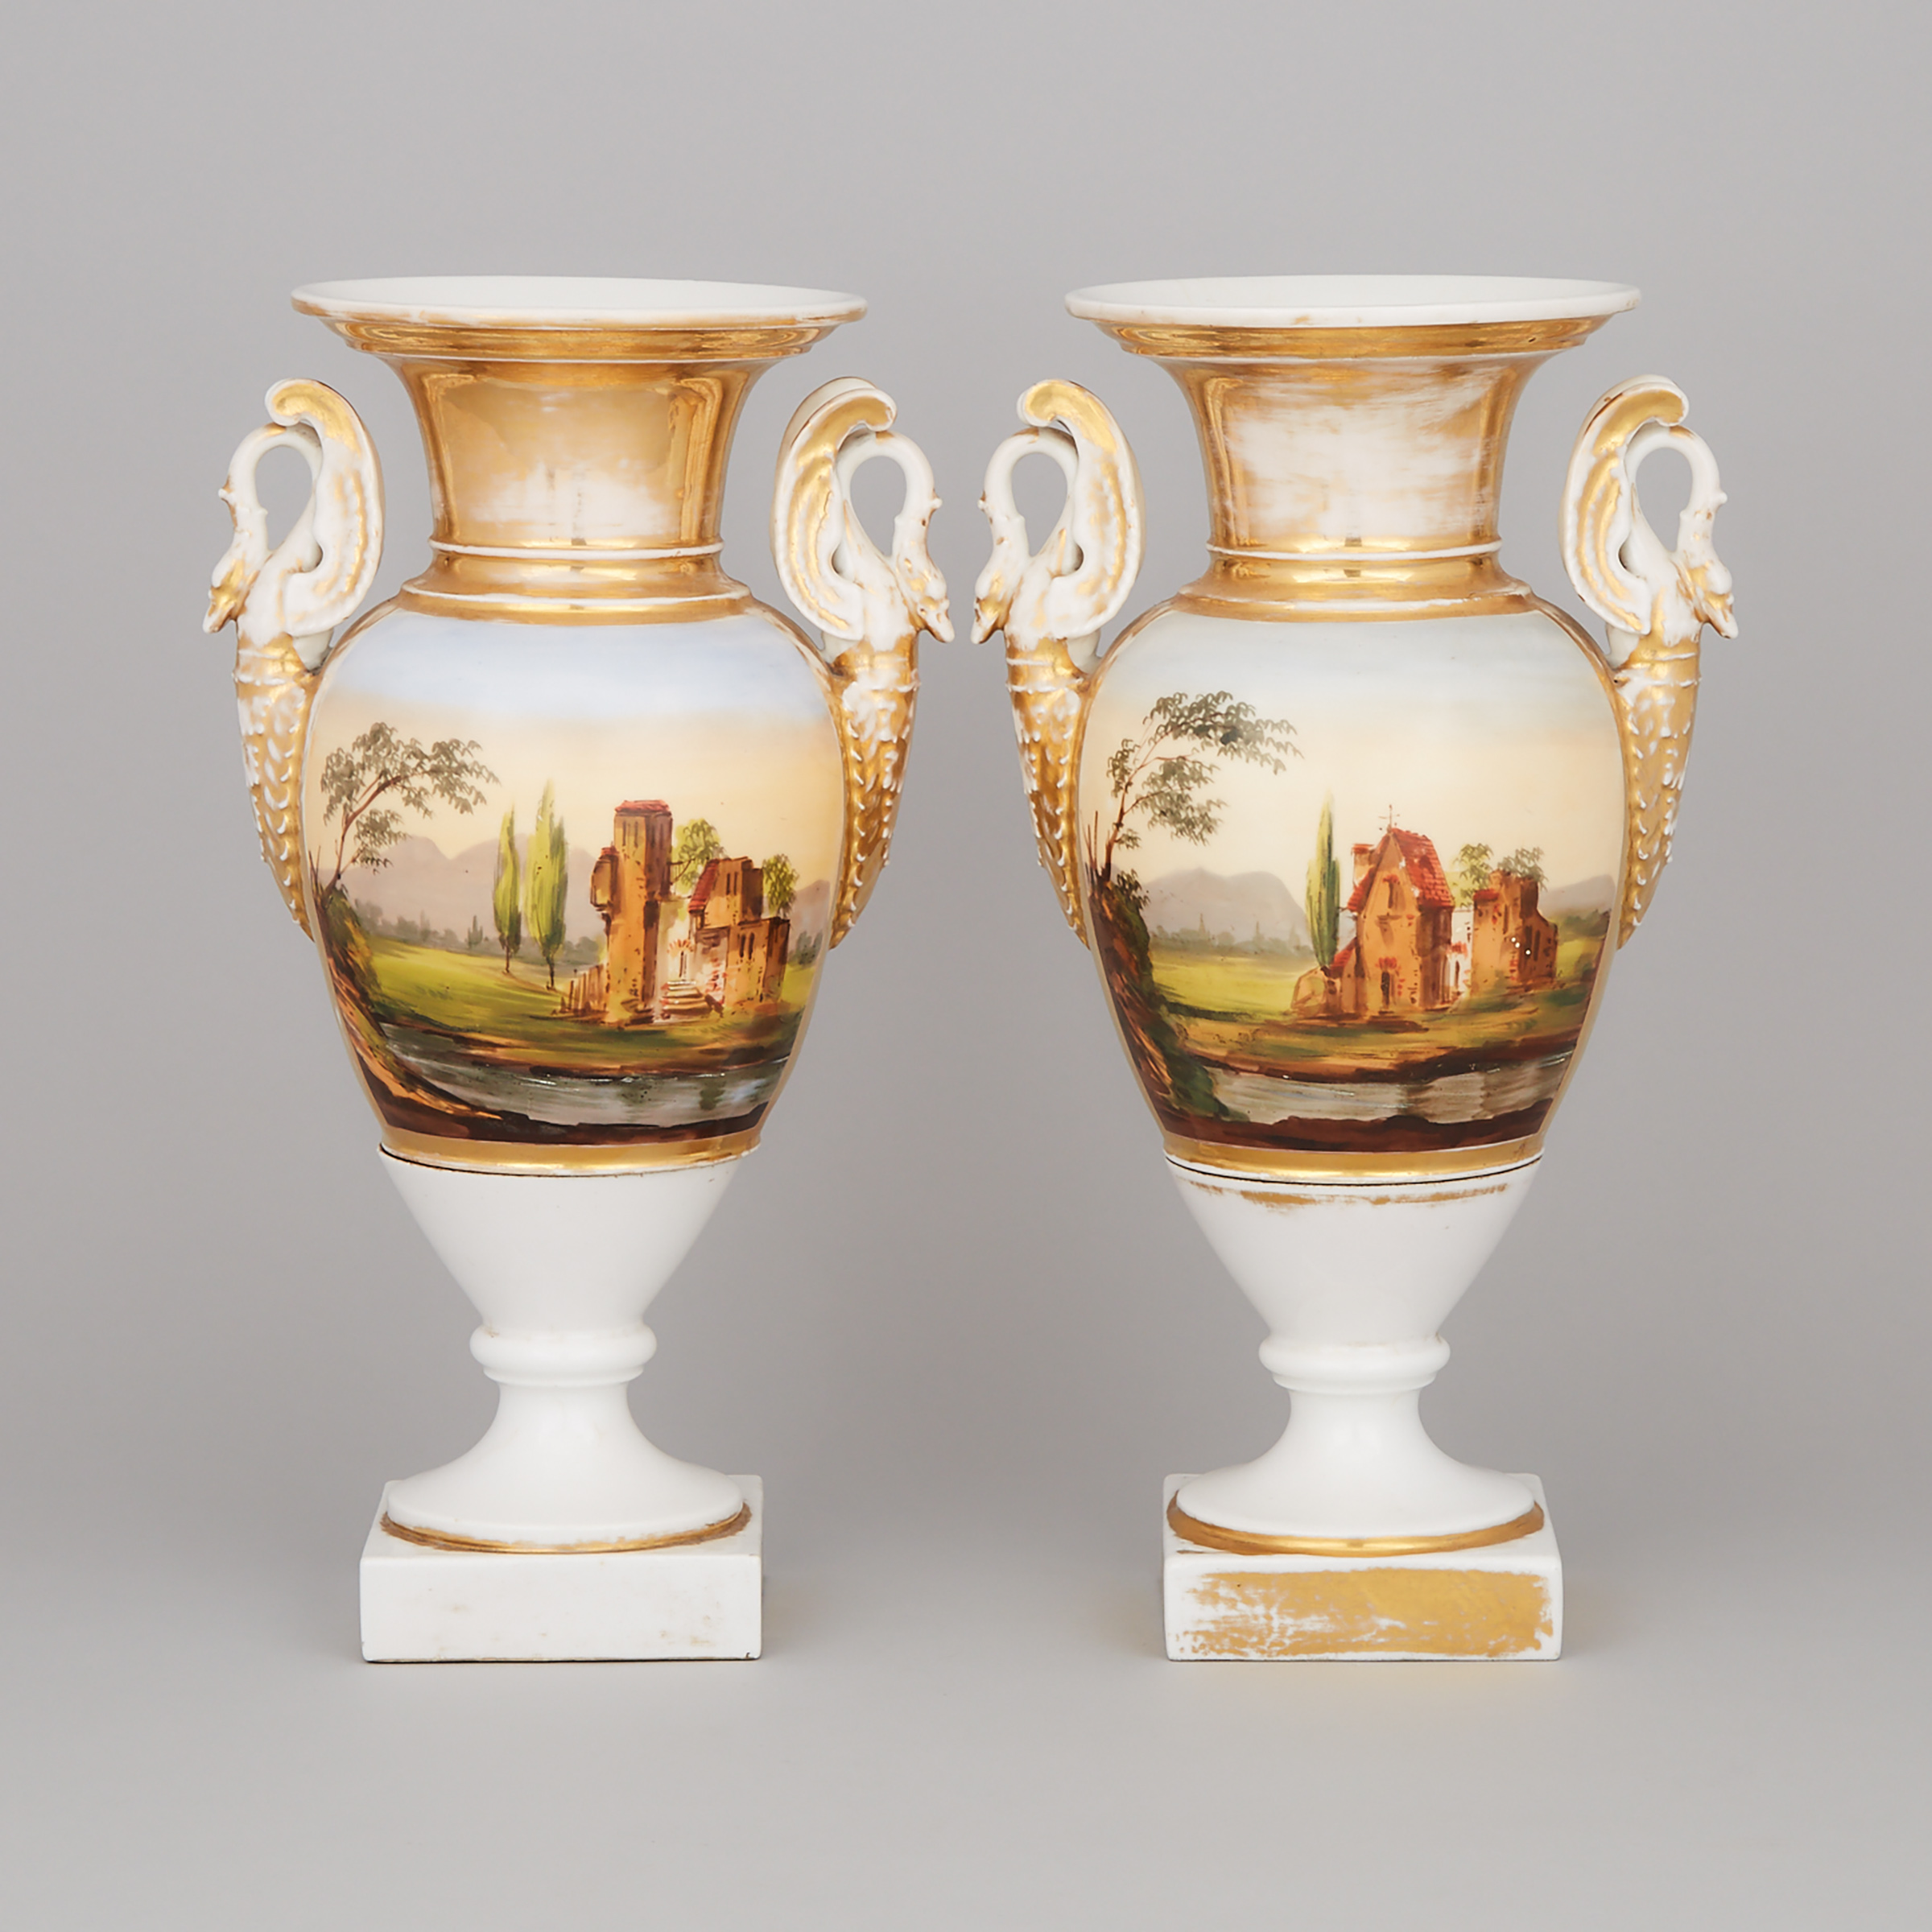 Pair of Paris Porcelain Two-Handled Vases, mid-19th century